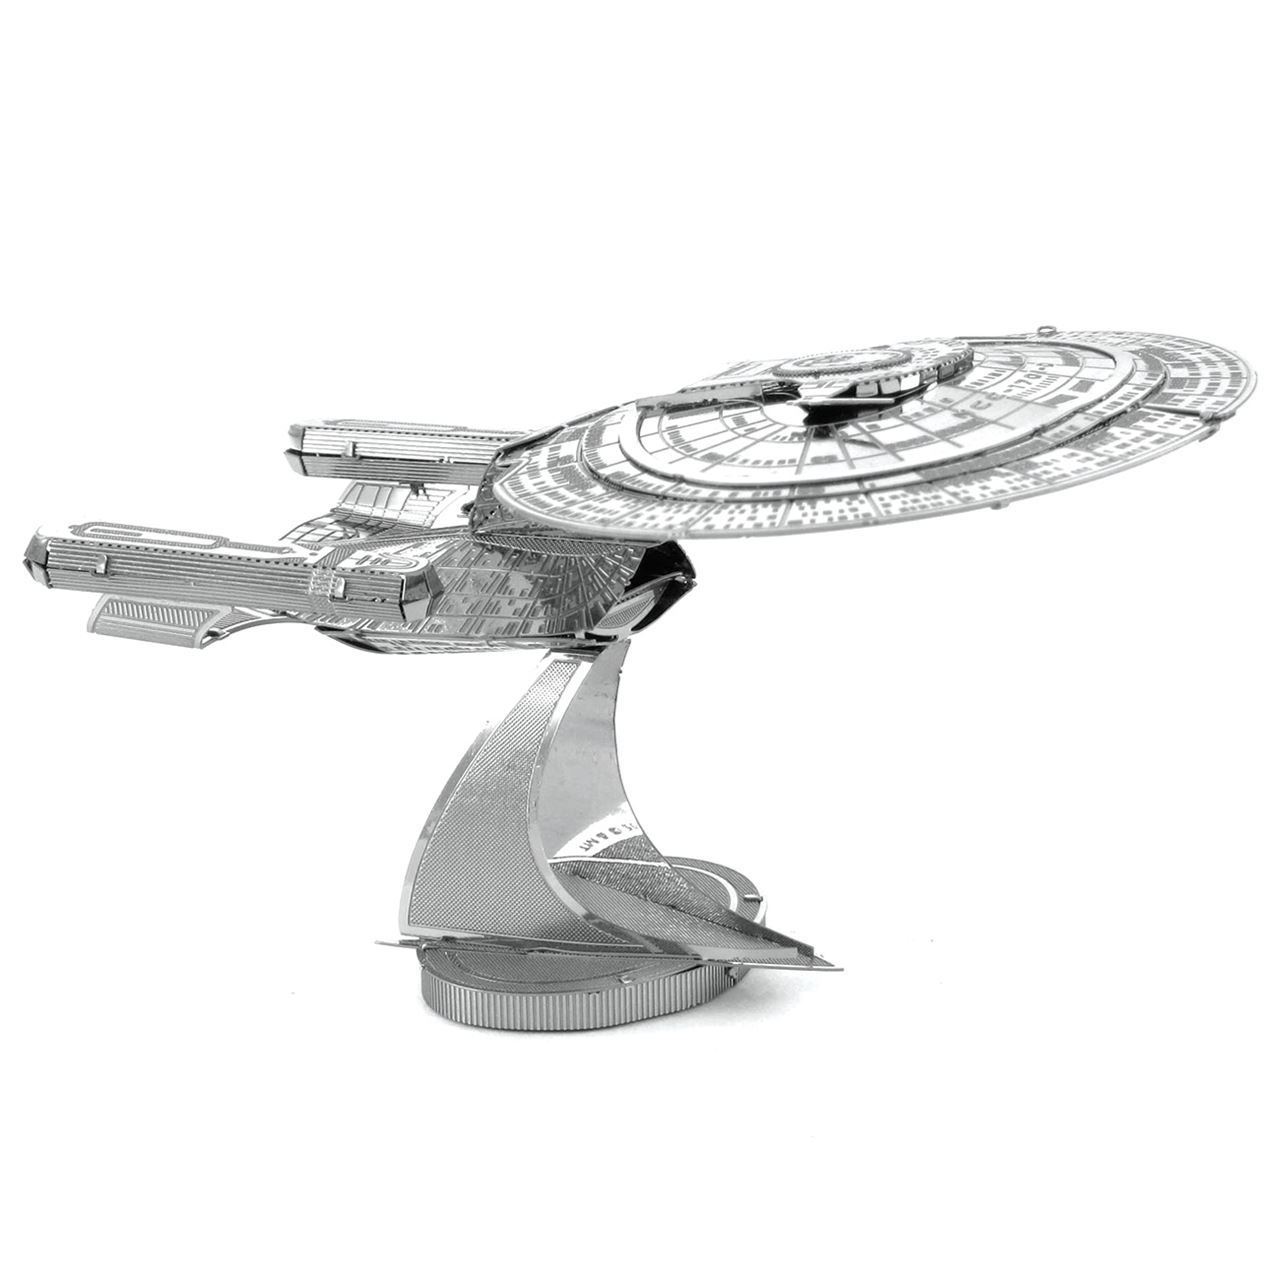 Fascinations Metal Earth Star Trek USS Enterprise NNC-1701 3D Model Kit MMS280 